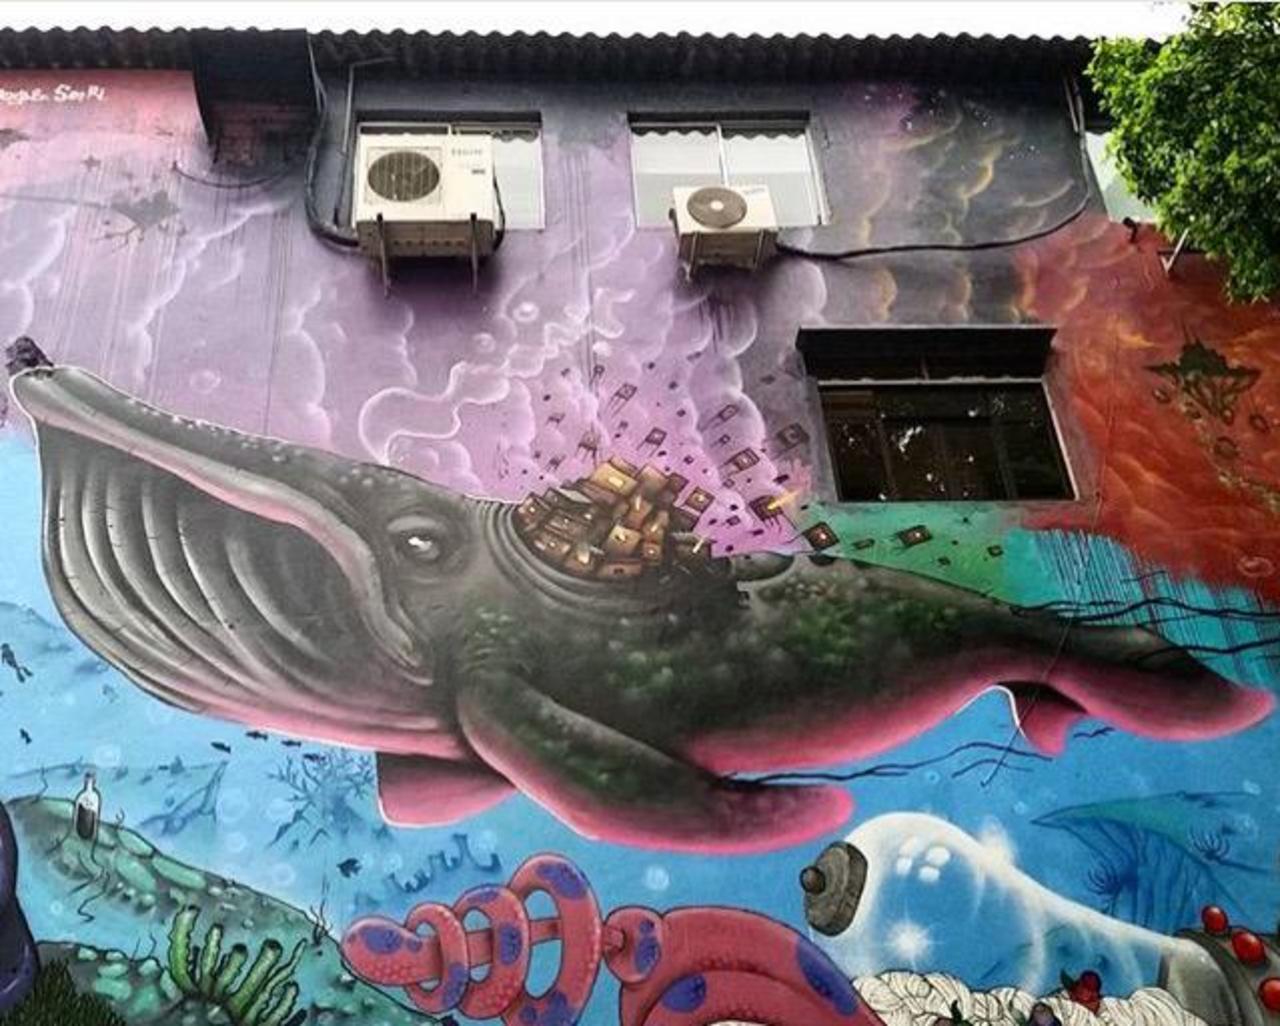 New tumblr post: "Street Art by joks_johnes Pinheiros, São Paulo 

#art #mural #graffiti #streetart http://t.co/fMFTHAFtpI" …